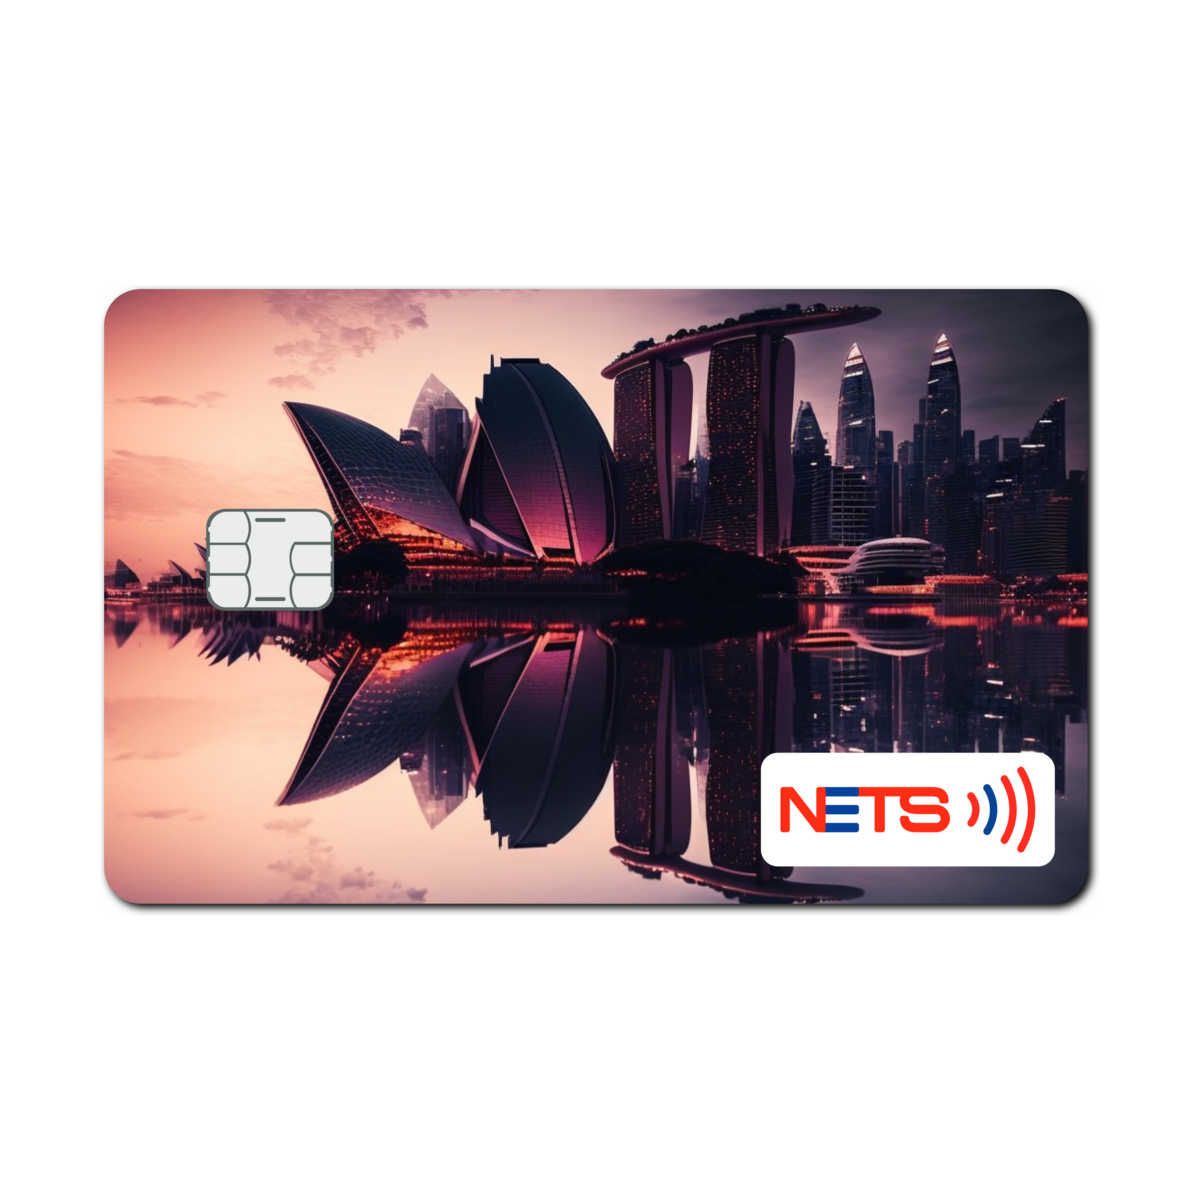 Singapore 2050 – NETS Prepaid Cards